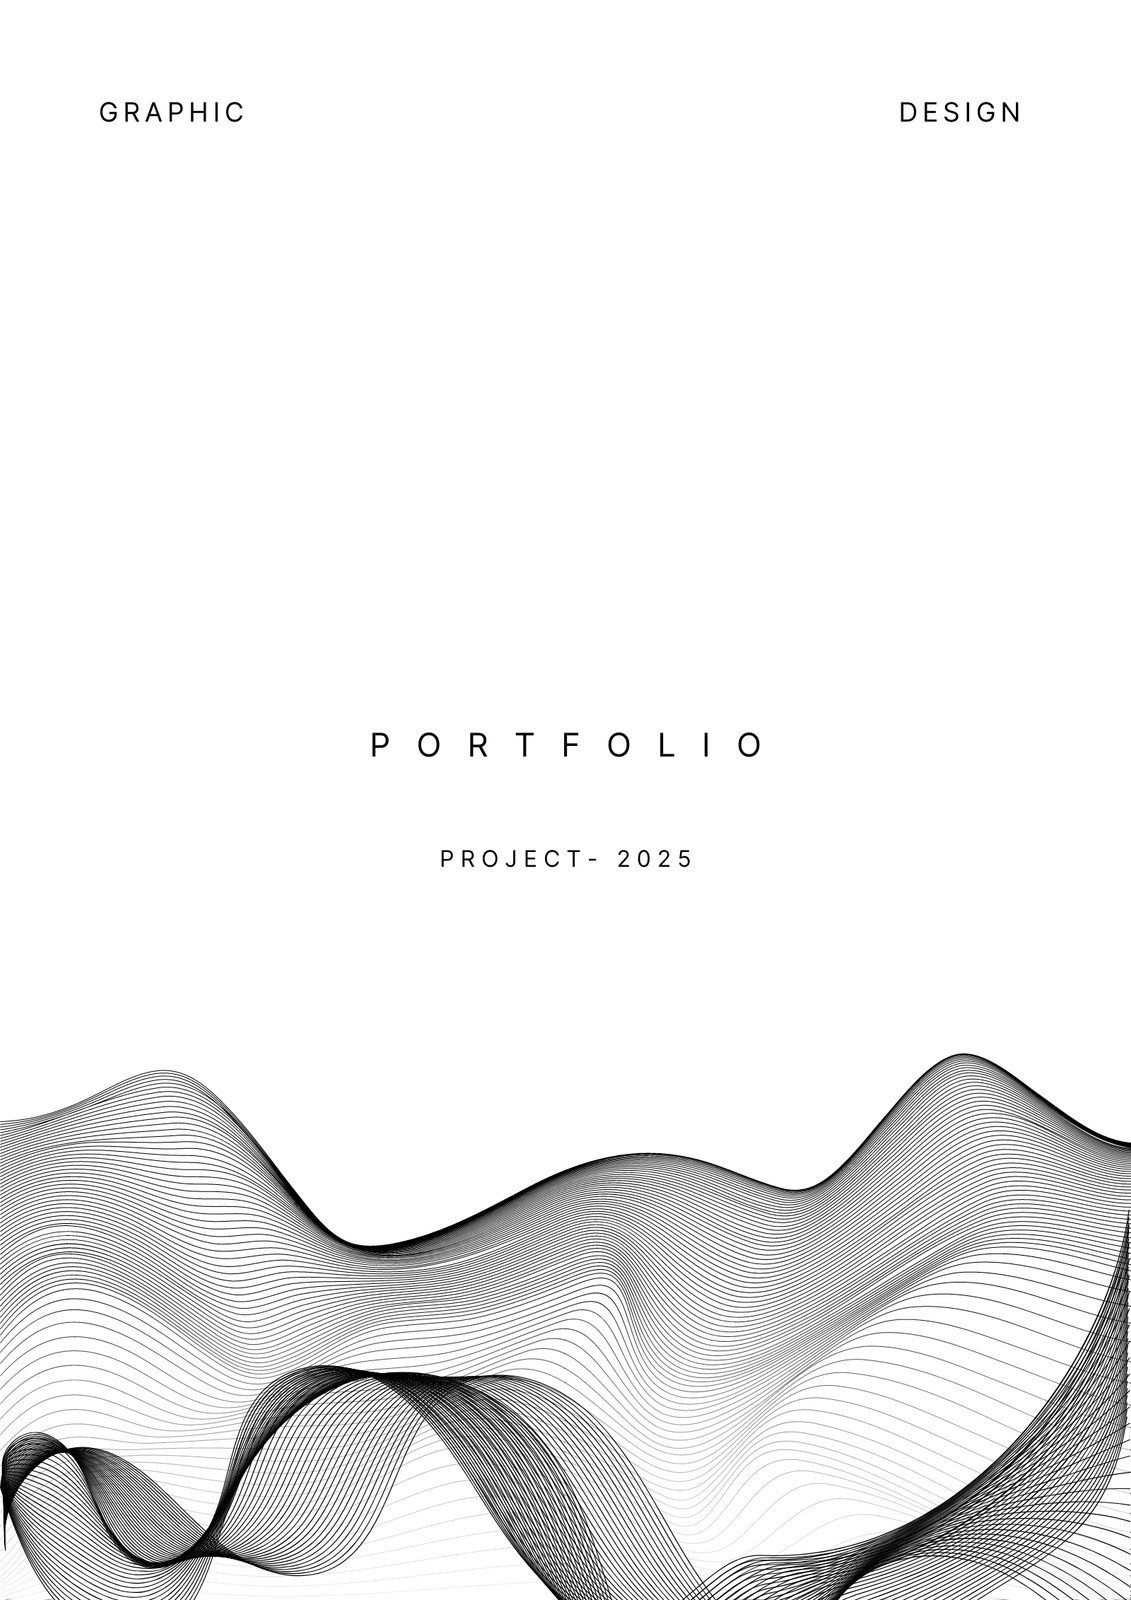 White Modern Wave Graphic Designer Portfolio Cover a4 Document